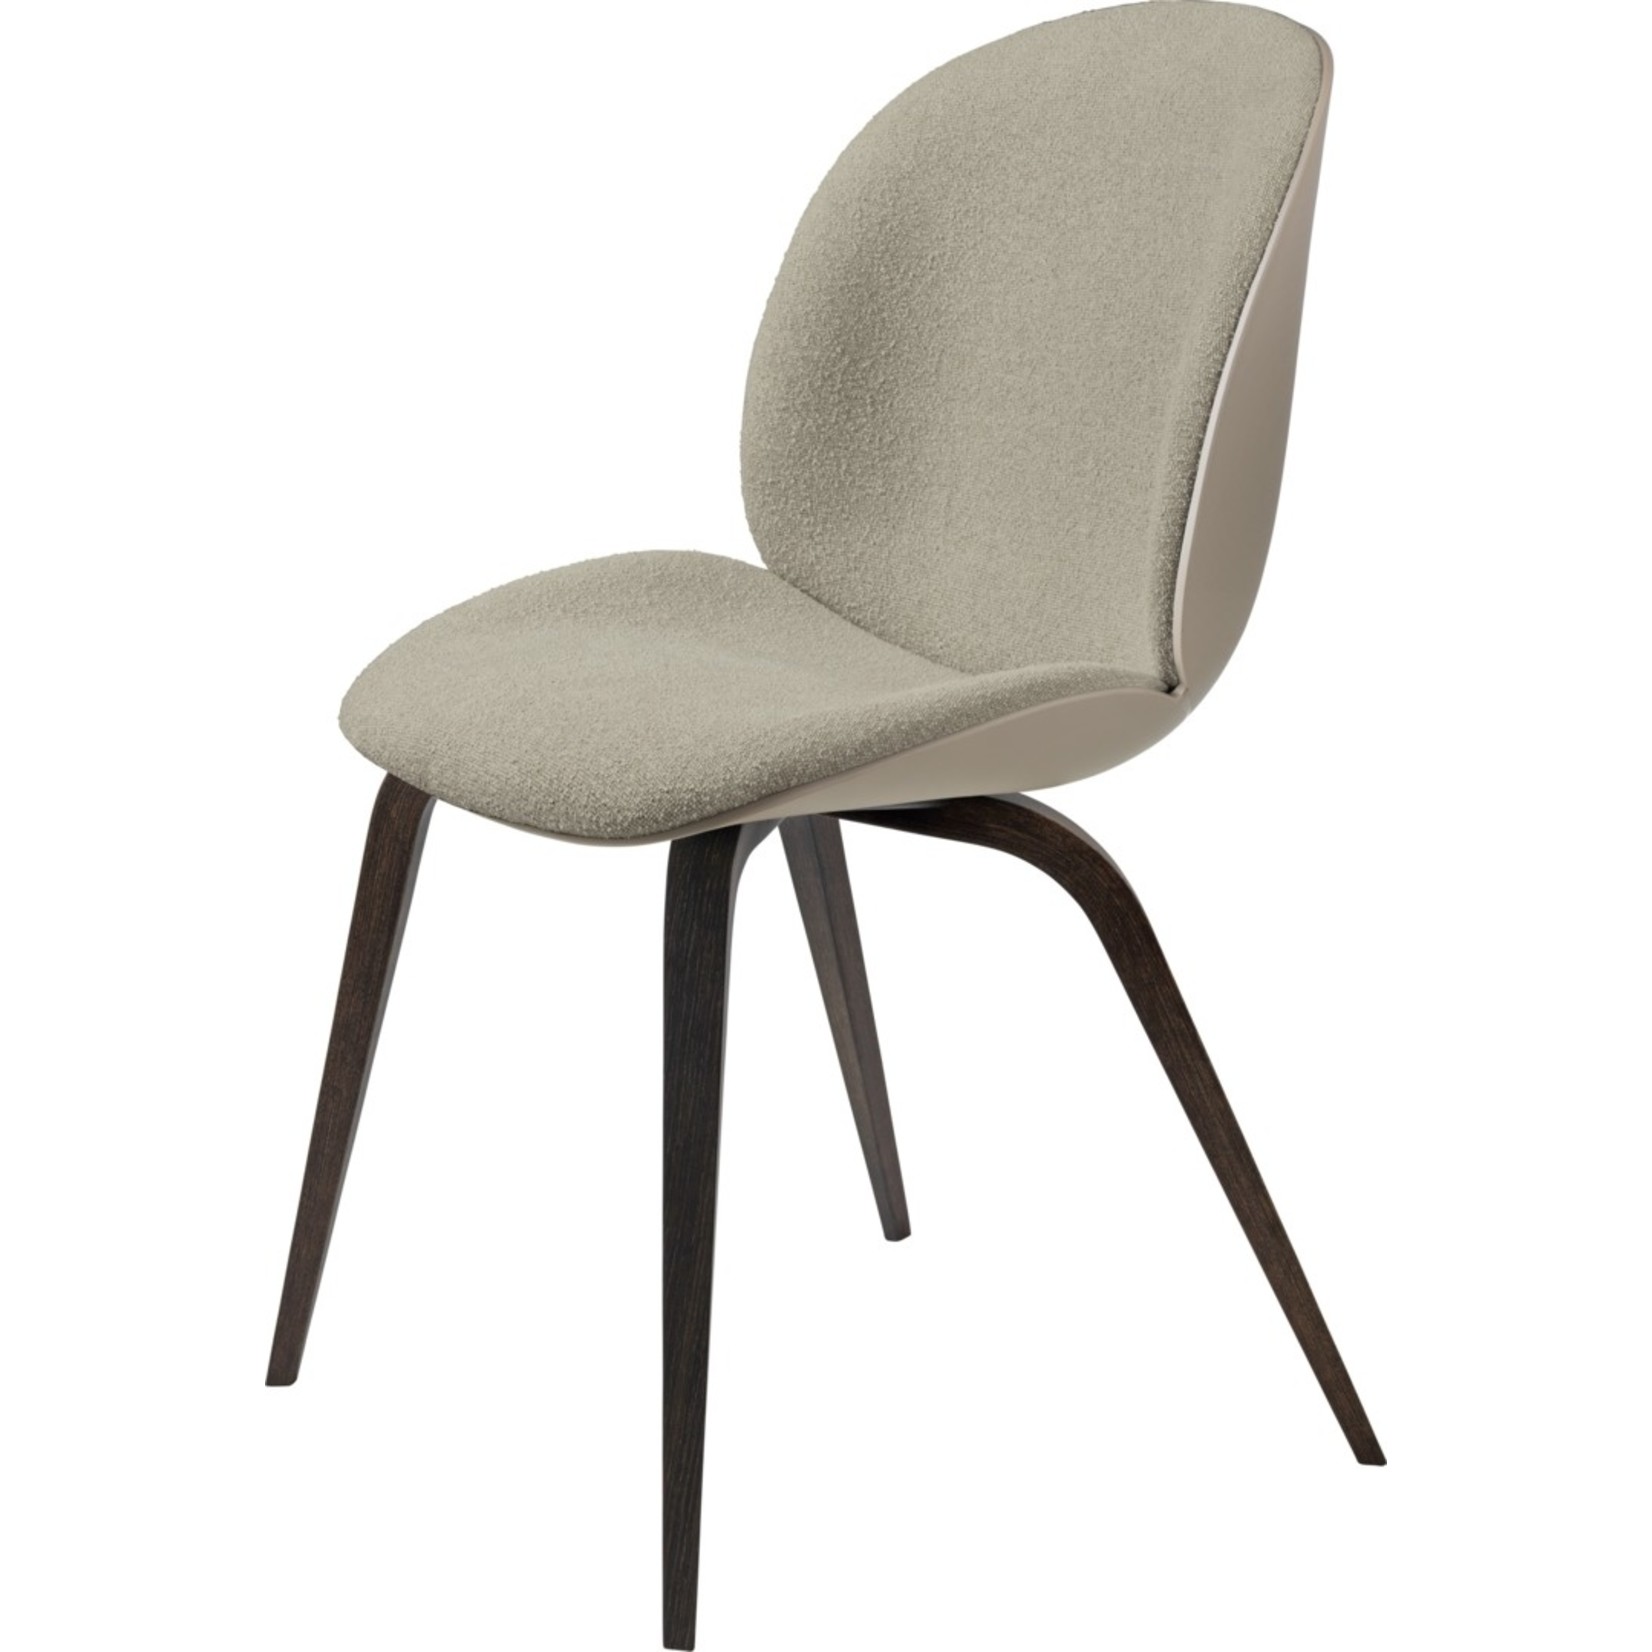 Gubi Beetle Dining Chair | Front Upholstered Light Bouclé, New Beige & Smoked Oak Matt Lacquered Base